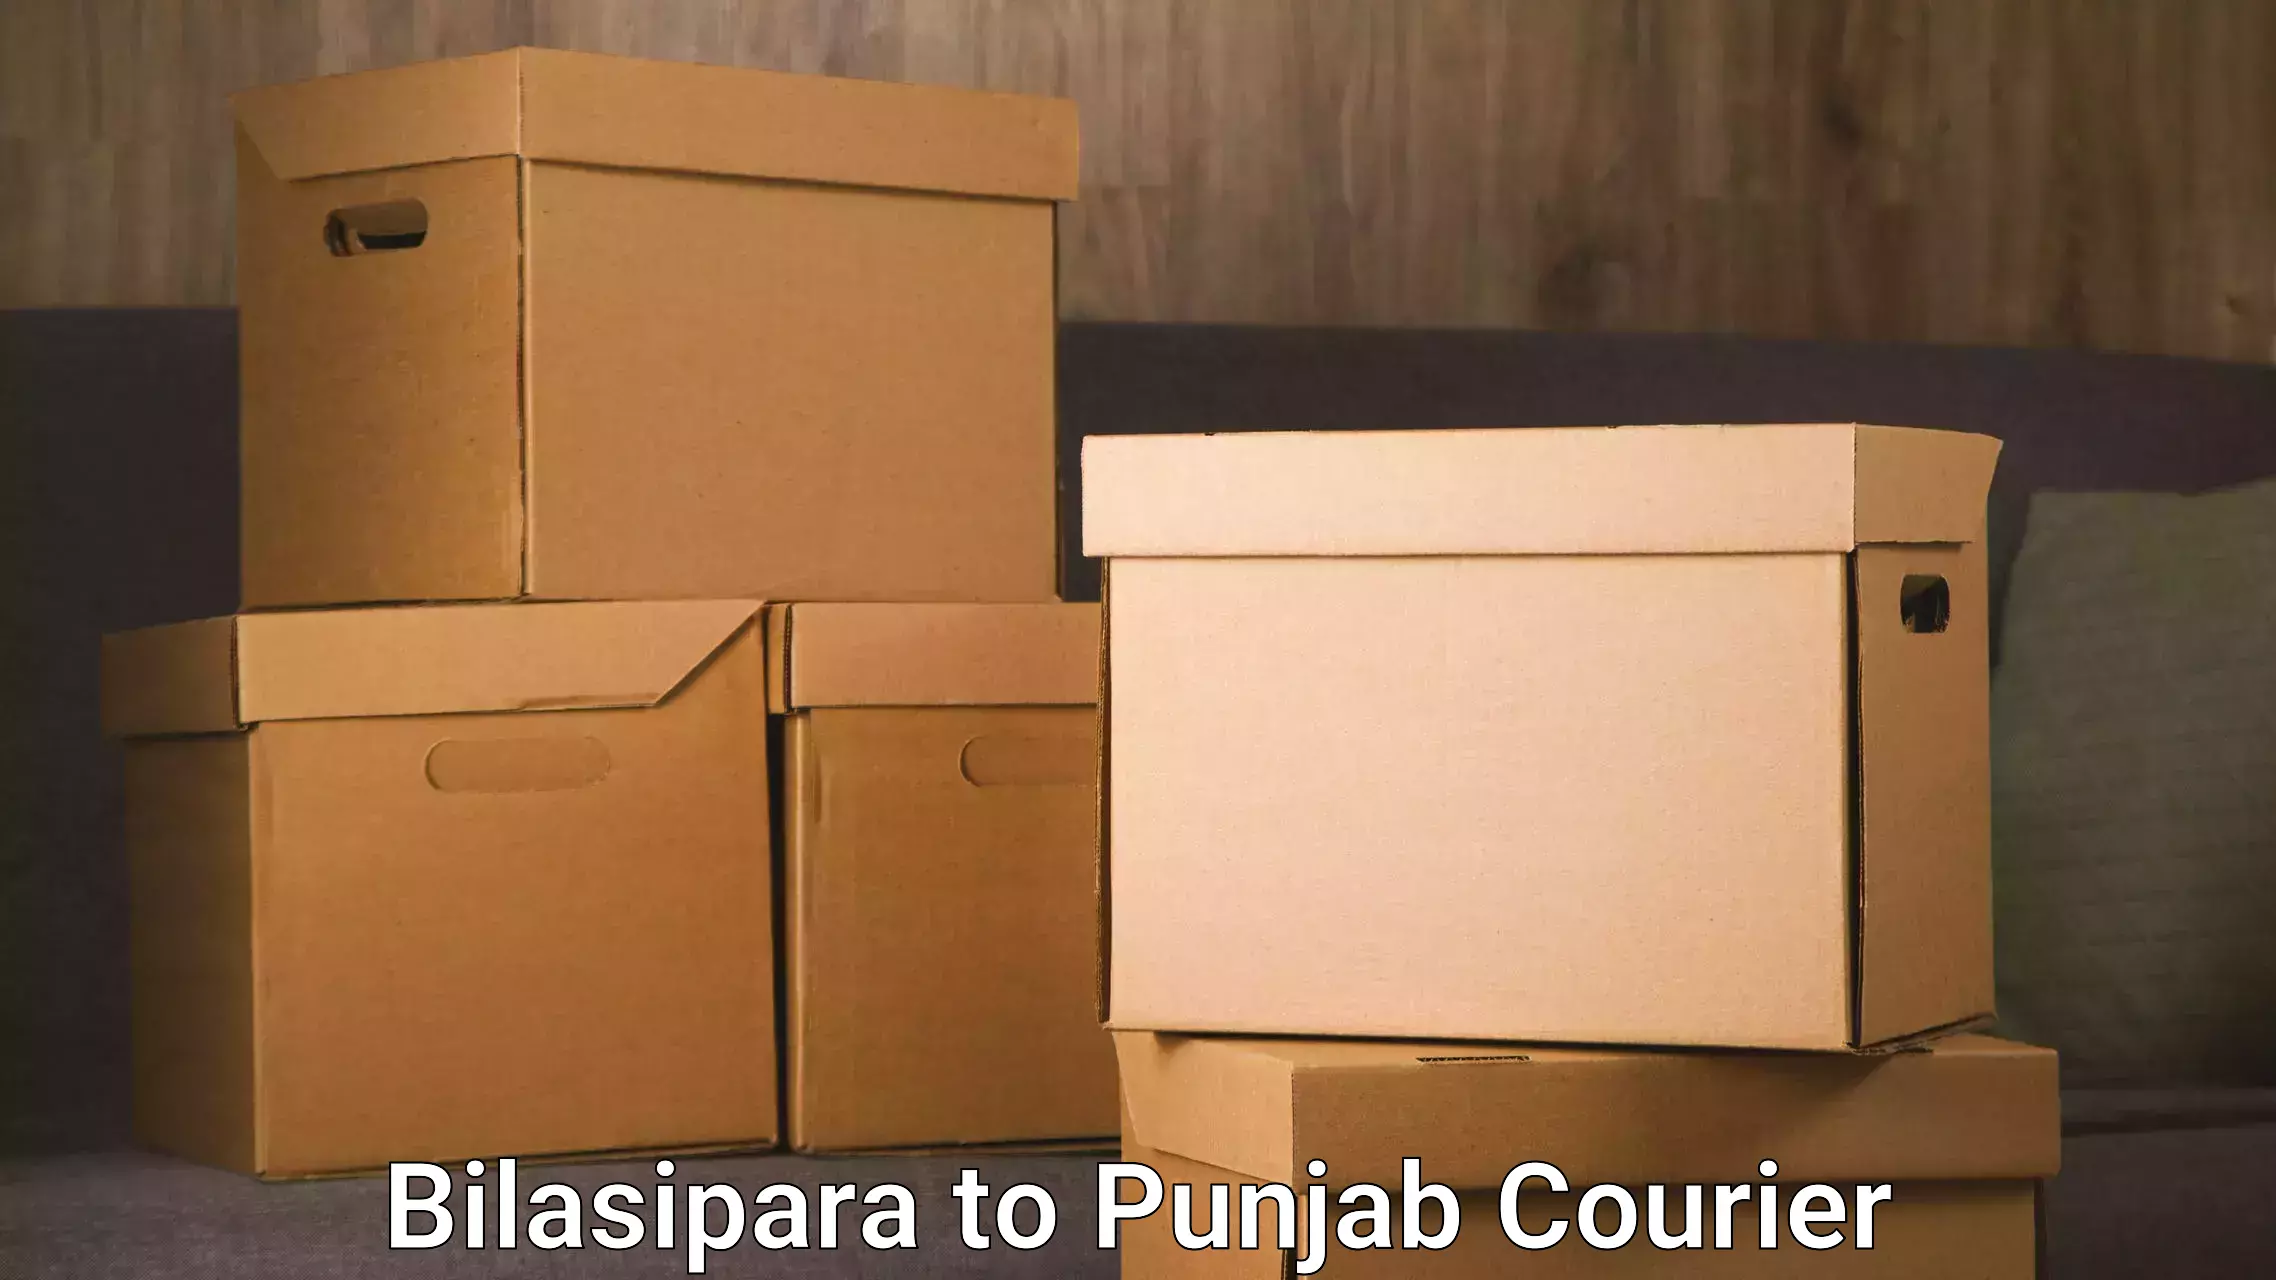 Courier service comparison in Bilasipara to Zirakpur